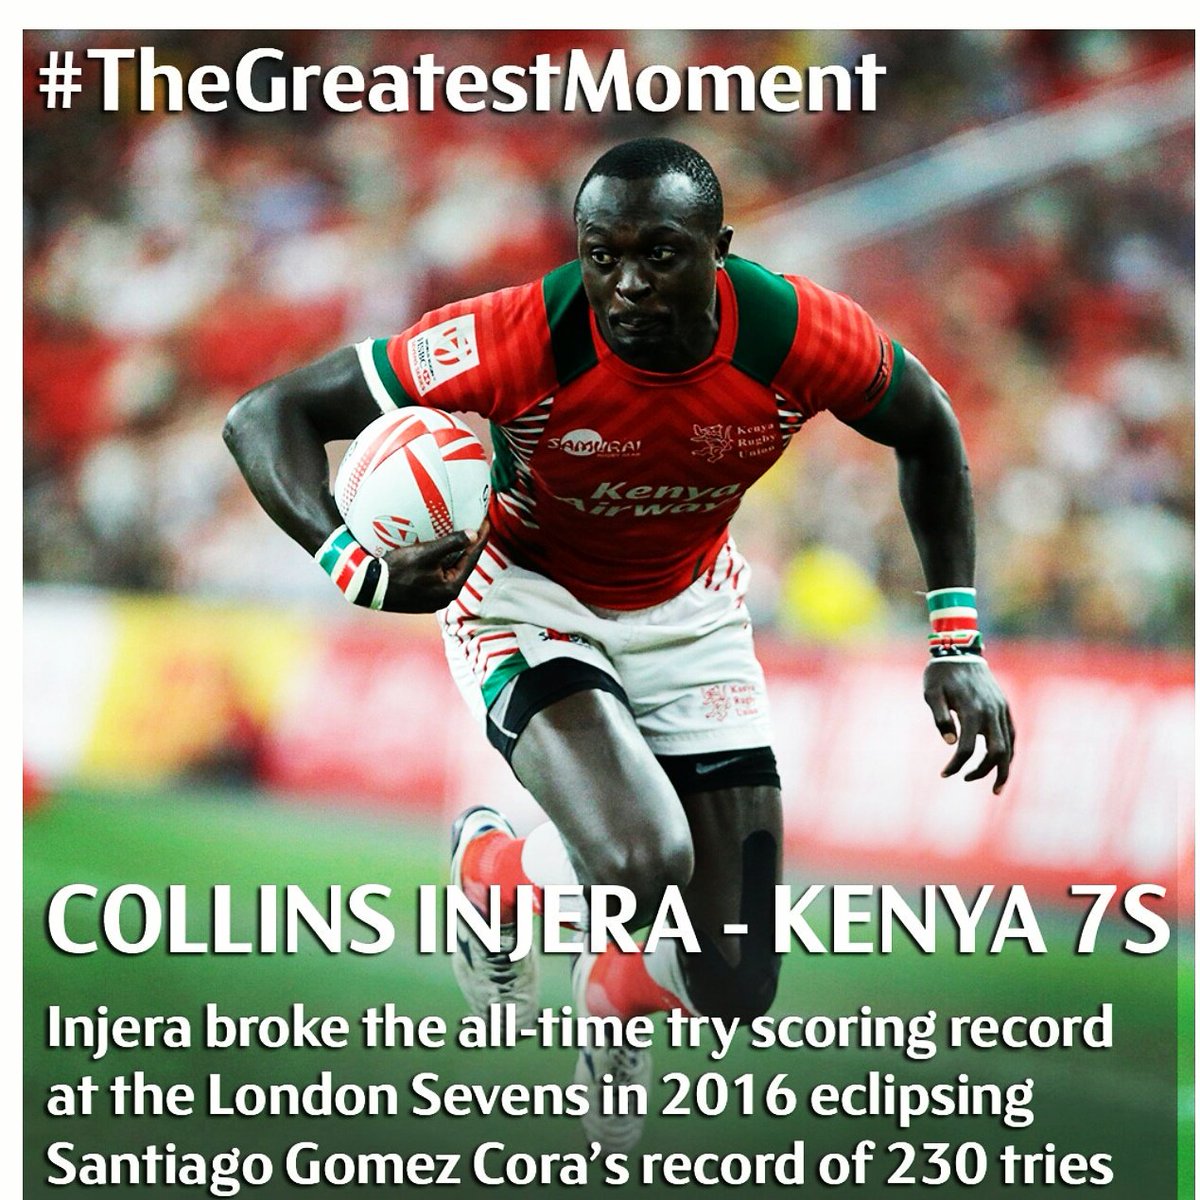 BE KENYAN! 

Visit worldrugby.org/greatestmoment and vote for #CollinsInjera.
#TheGreatestMoment 
#Kenya7s
#KOT
#Retweet